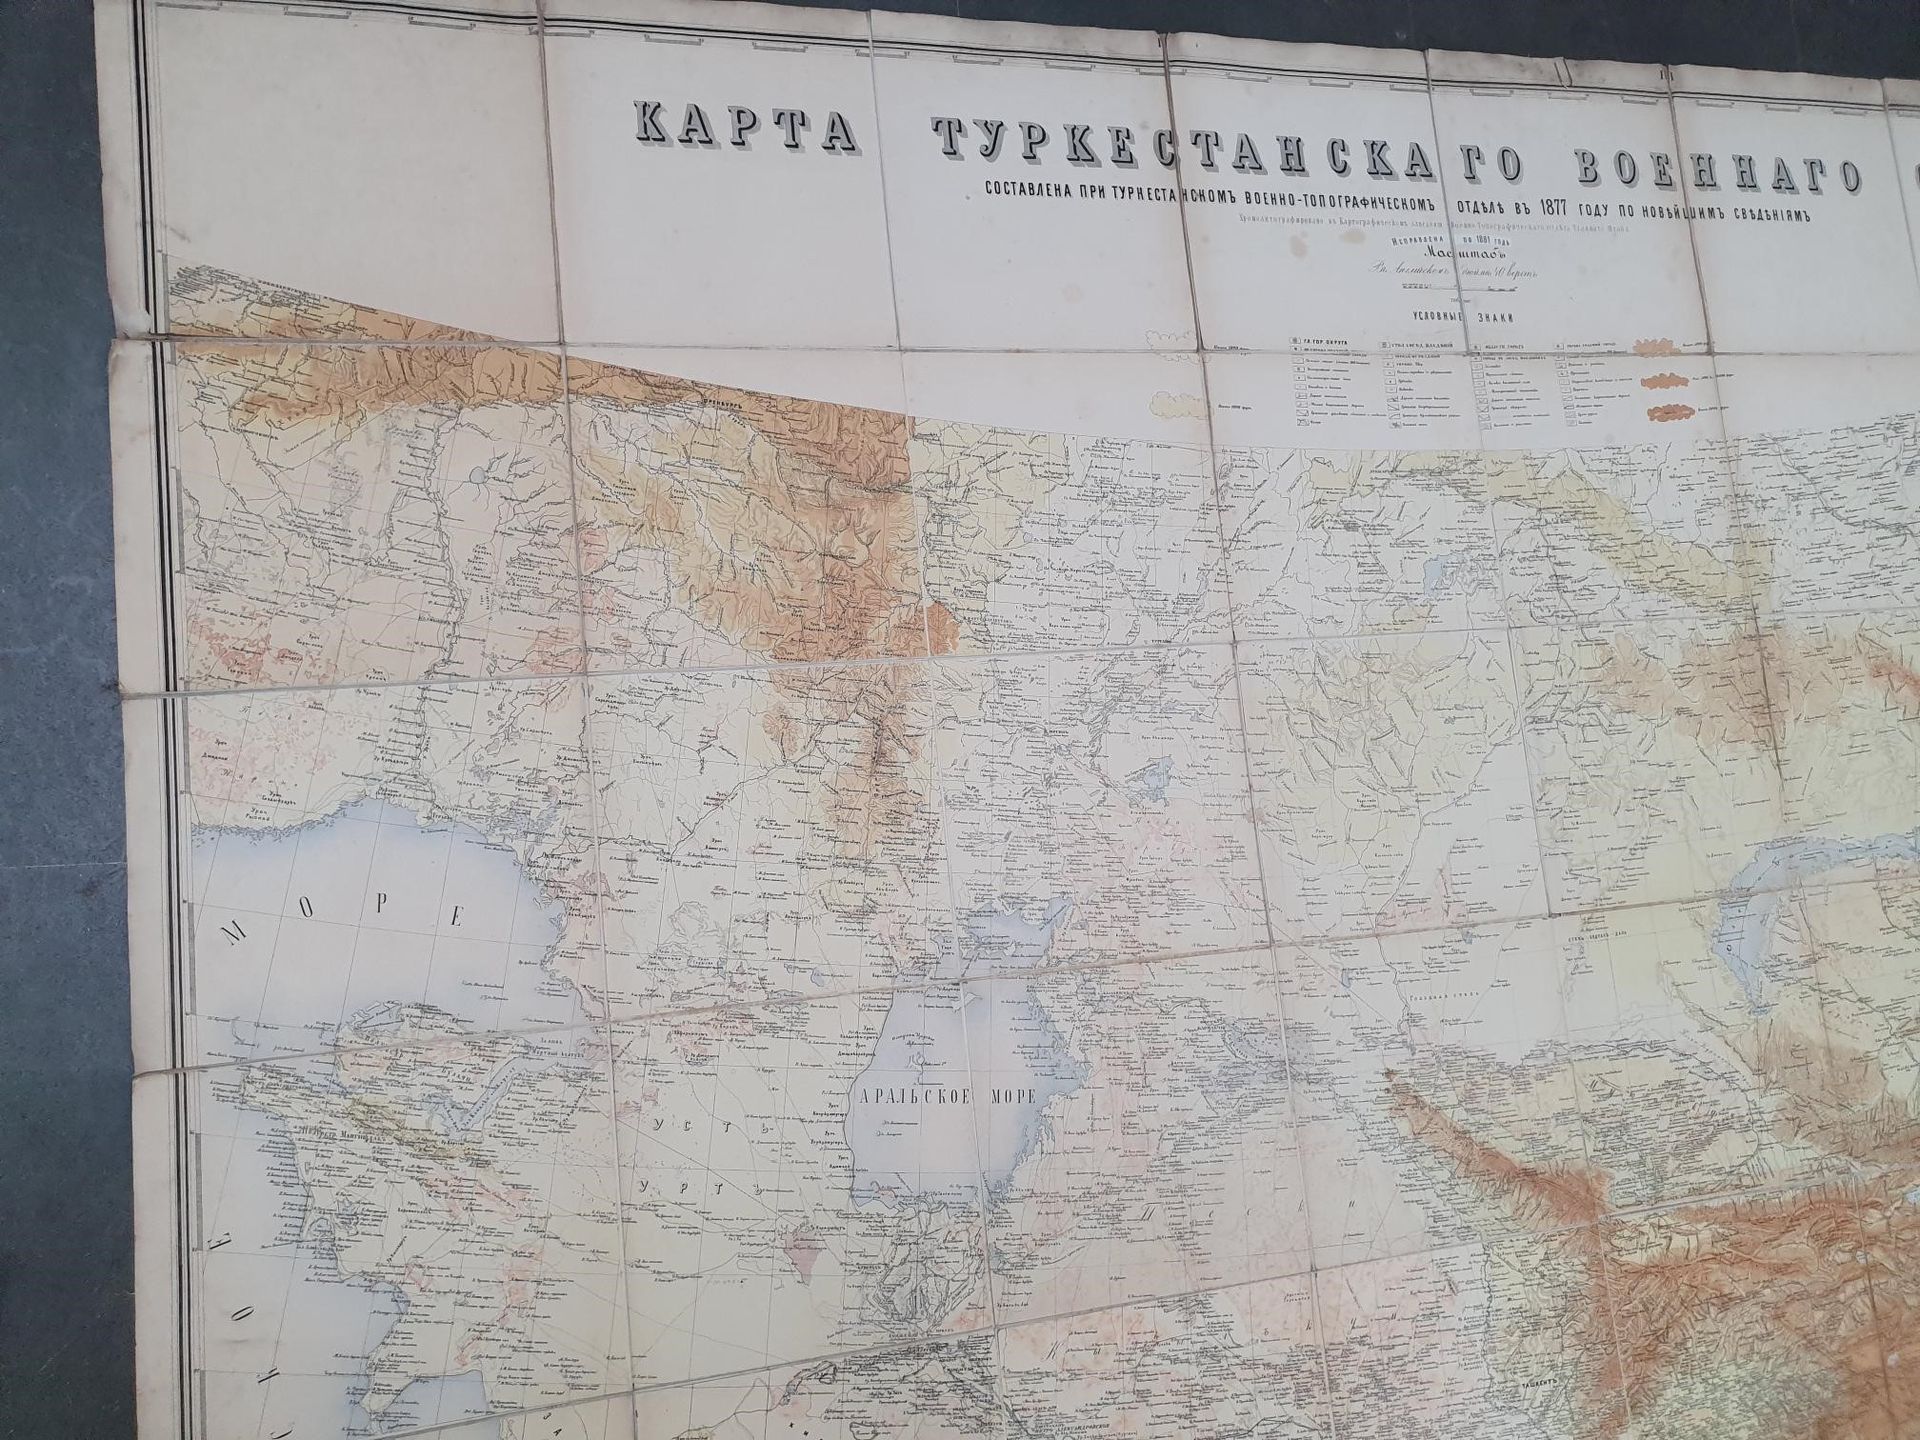 Null 土库曼斯坦：- [土耳其斯坦军事地形局]；[土耳其斯坦军事地图...]。1877/1881.彩色石版印刷 彩色石版印刷地图分为64段。覆盖和折叠。背面&hellip;